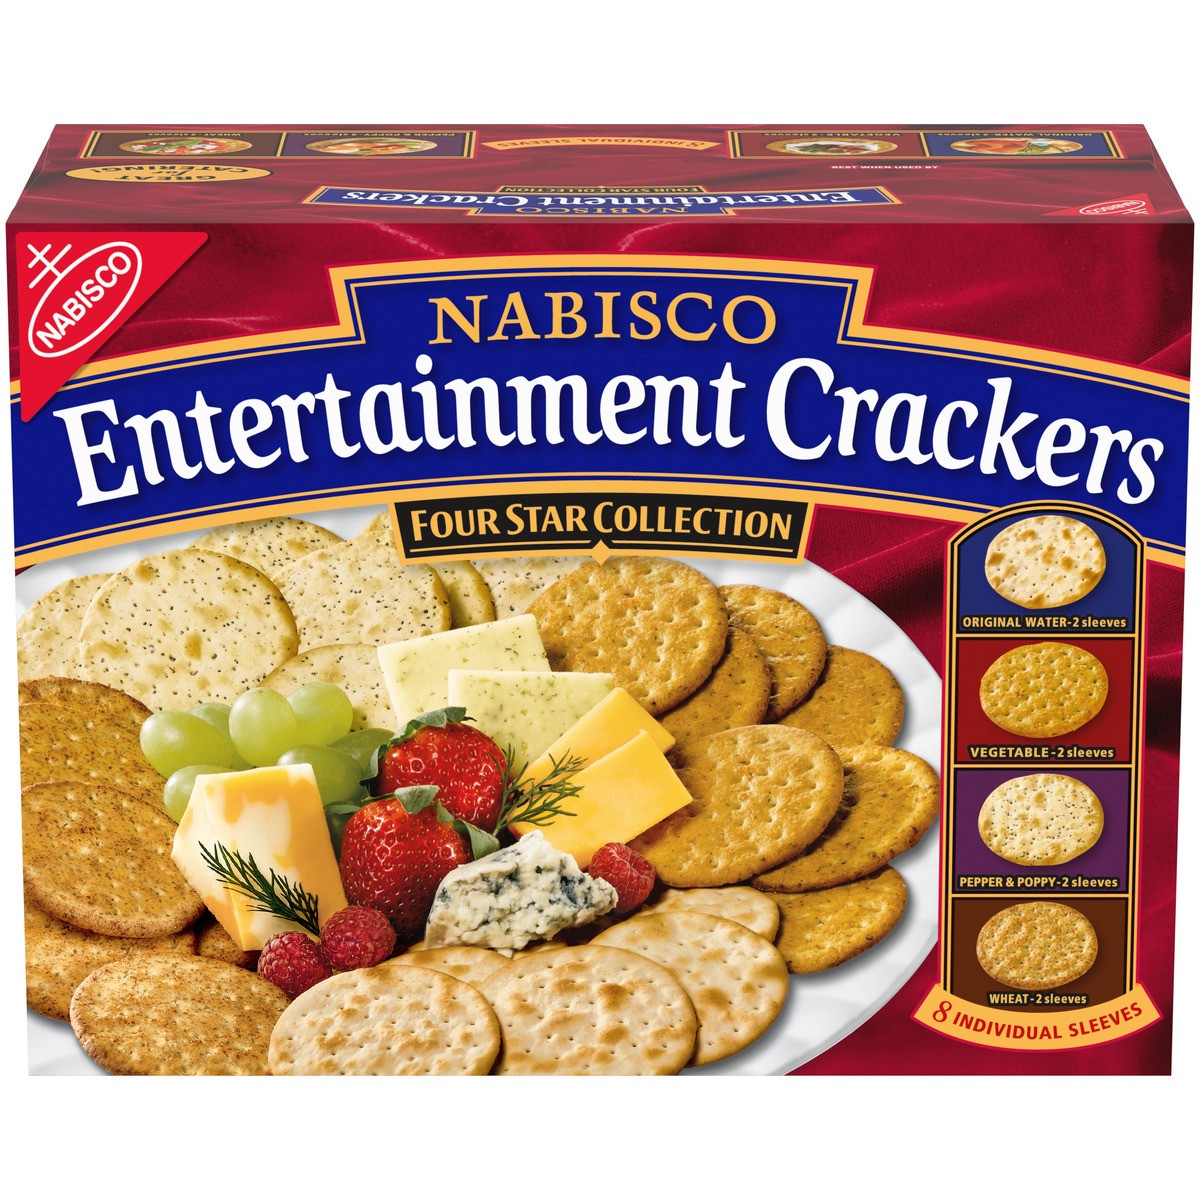 slide 13 of 14, Nabisco Entertainment Crackers Variety Pack, Original Water, Vegetable, Pepper & Poppy, Wheat, 8 Individual Sleeves, 2 lb 8 oz, 40.2 oz